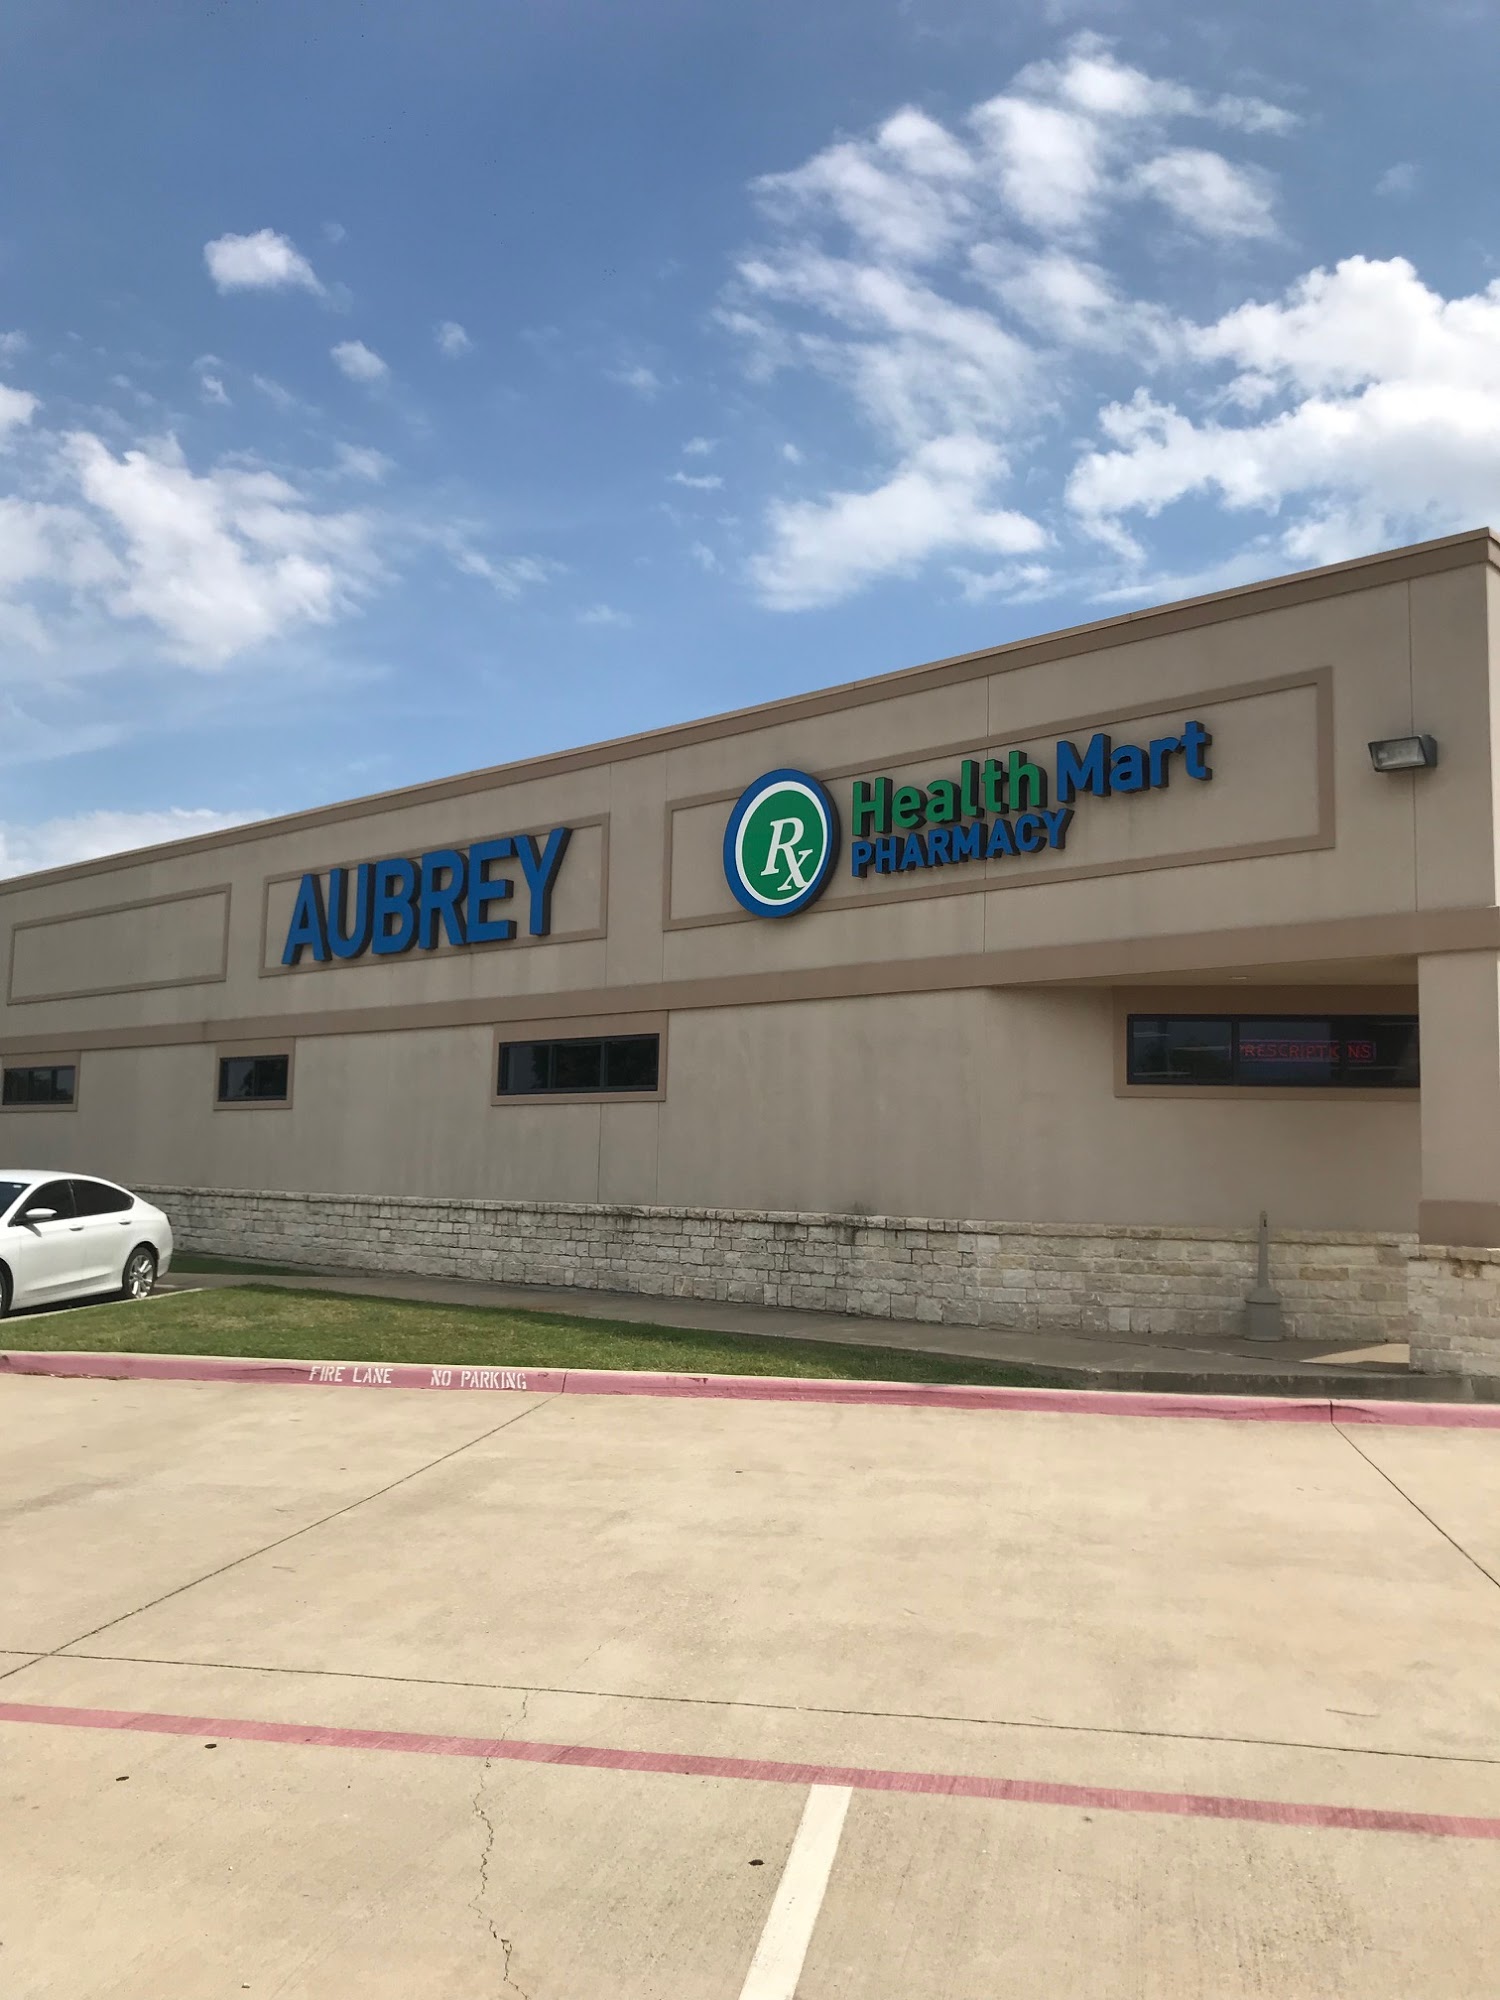 Aubrey HealthMart Pharmacy